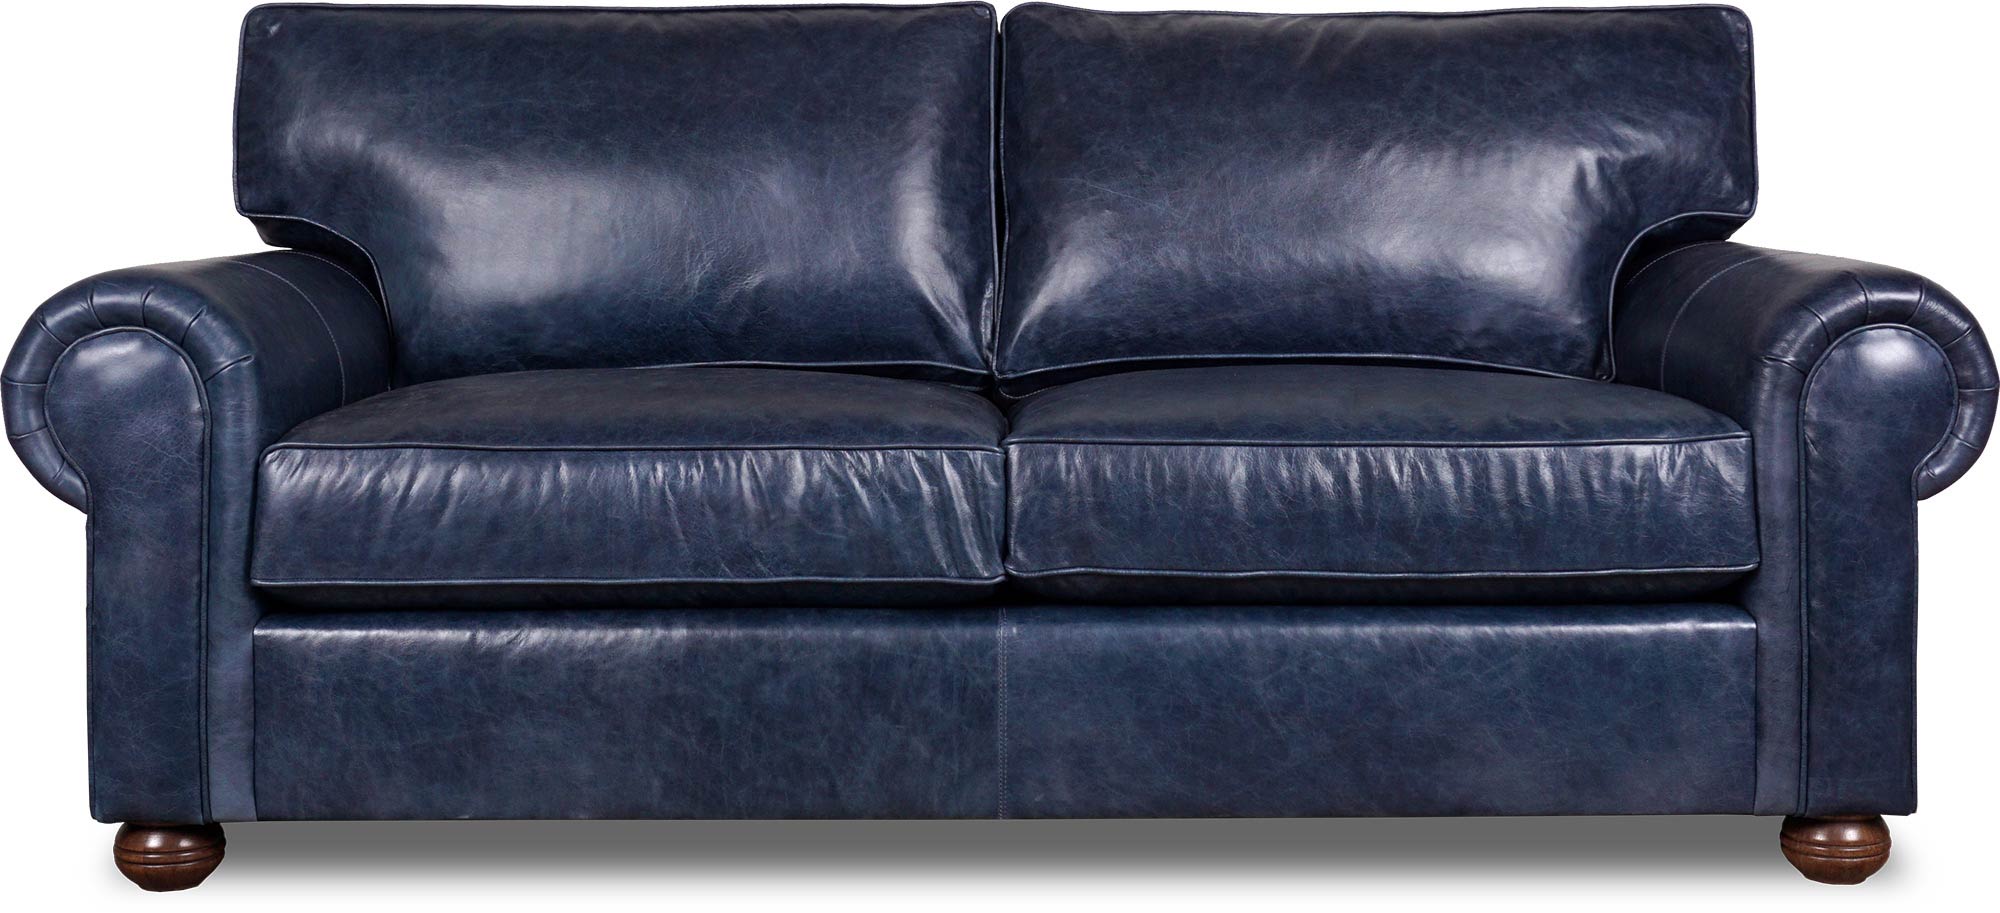 82 Lou sofa in Caprieze Denim Style blue leather